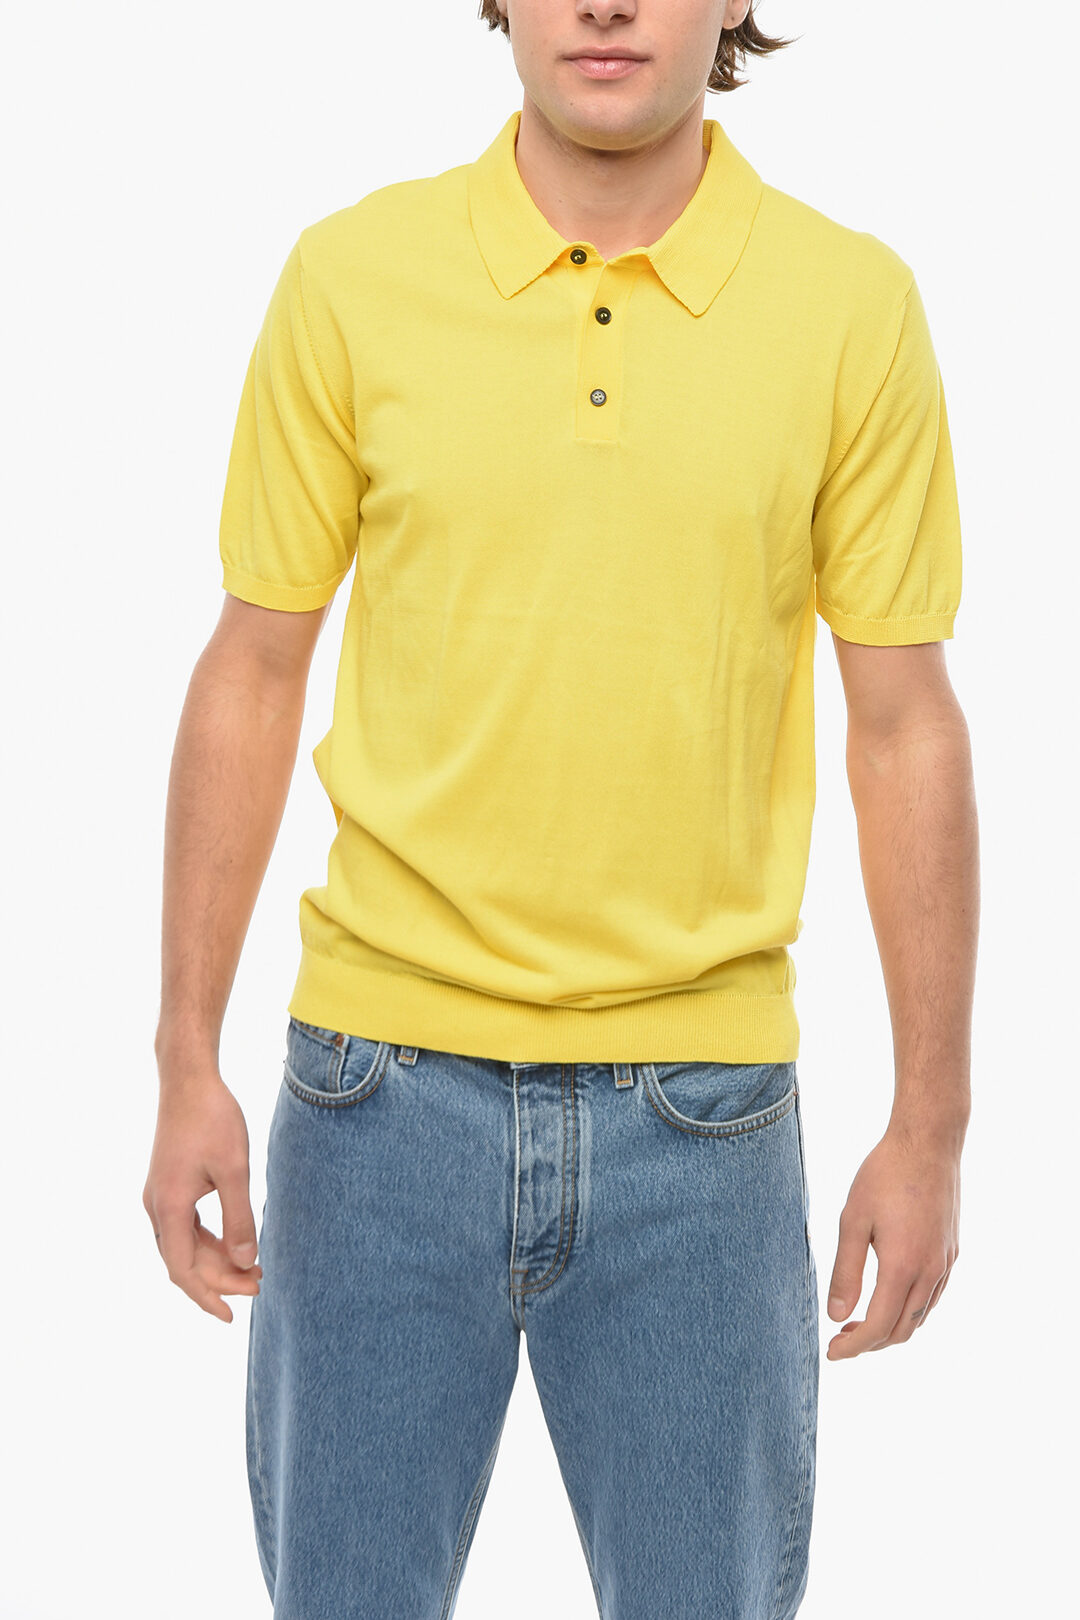 Roberto Solid Color Cotton Polo Shirt Glamood Outlet